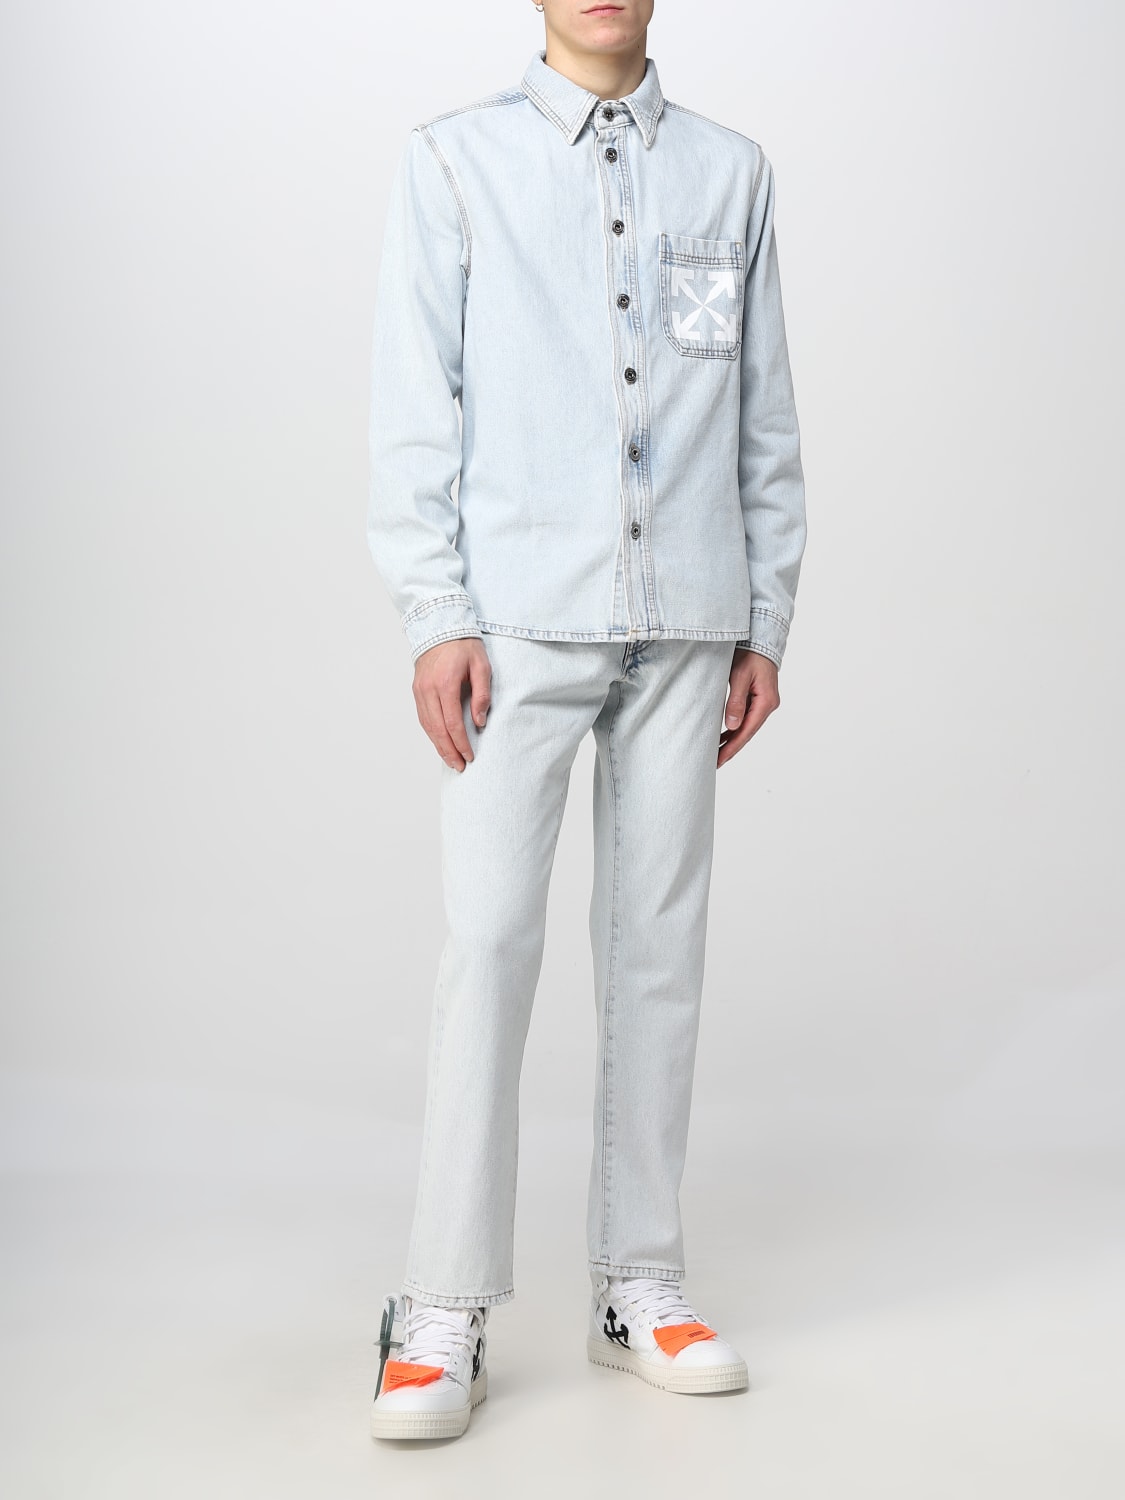 OFF-WHITE™, Jeans Blau Herren